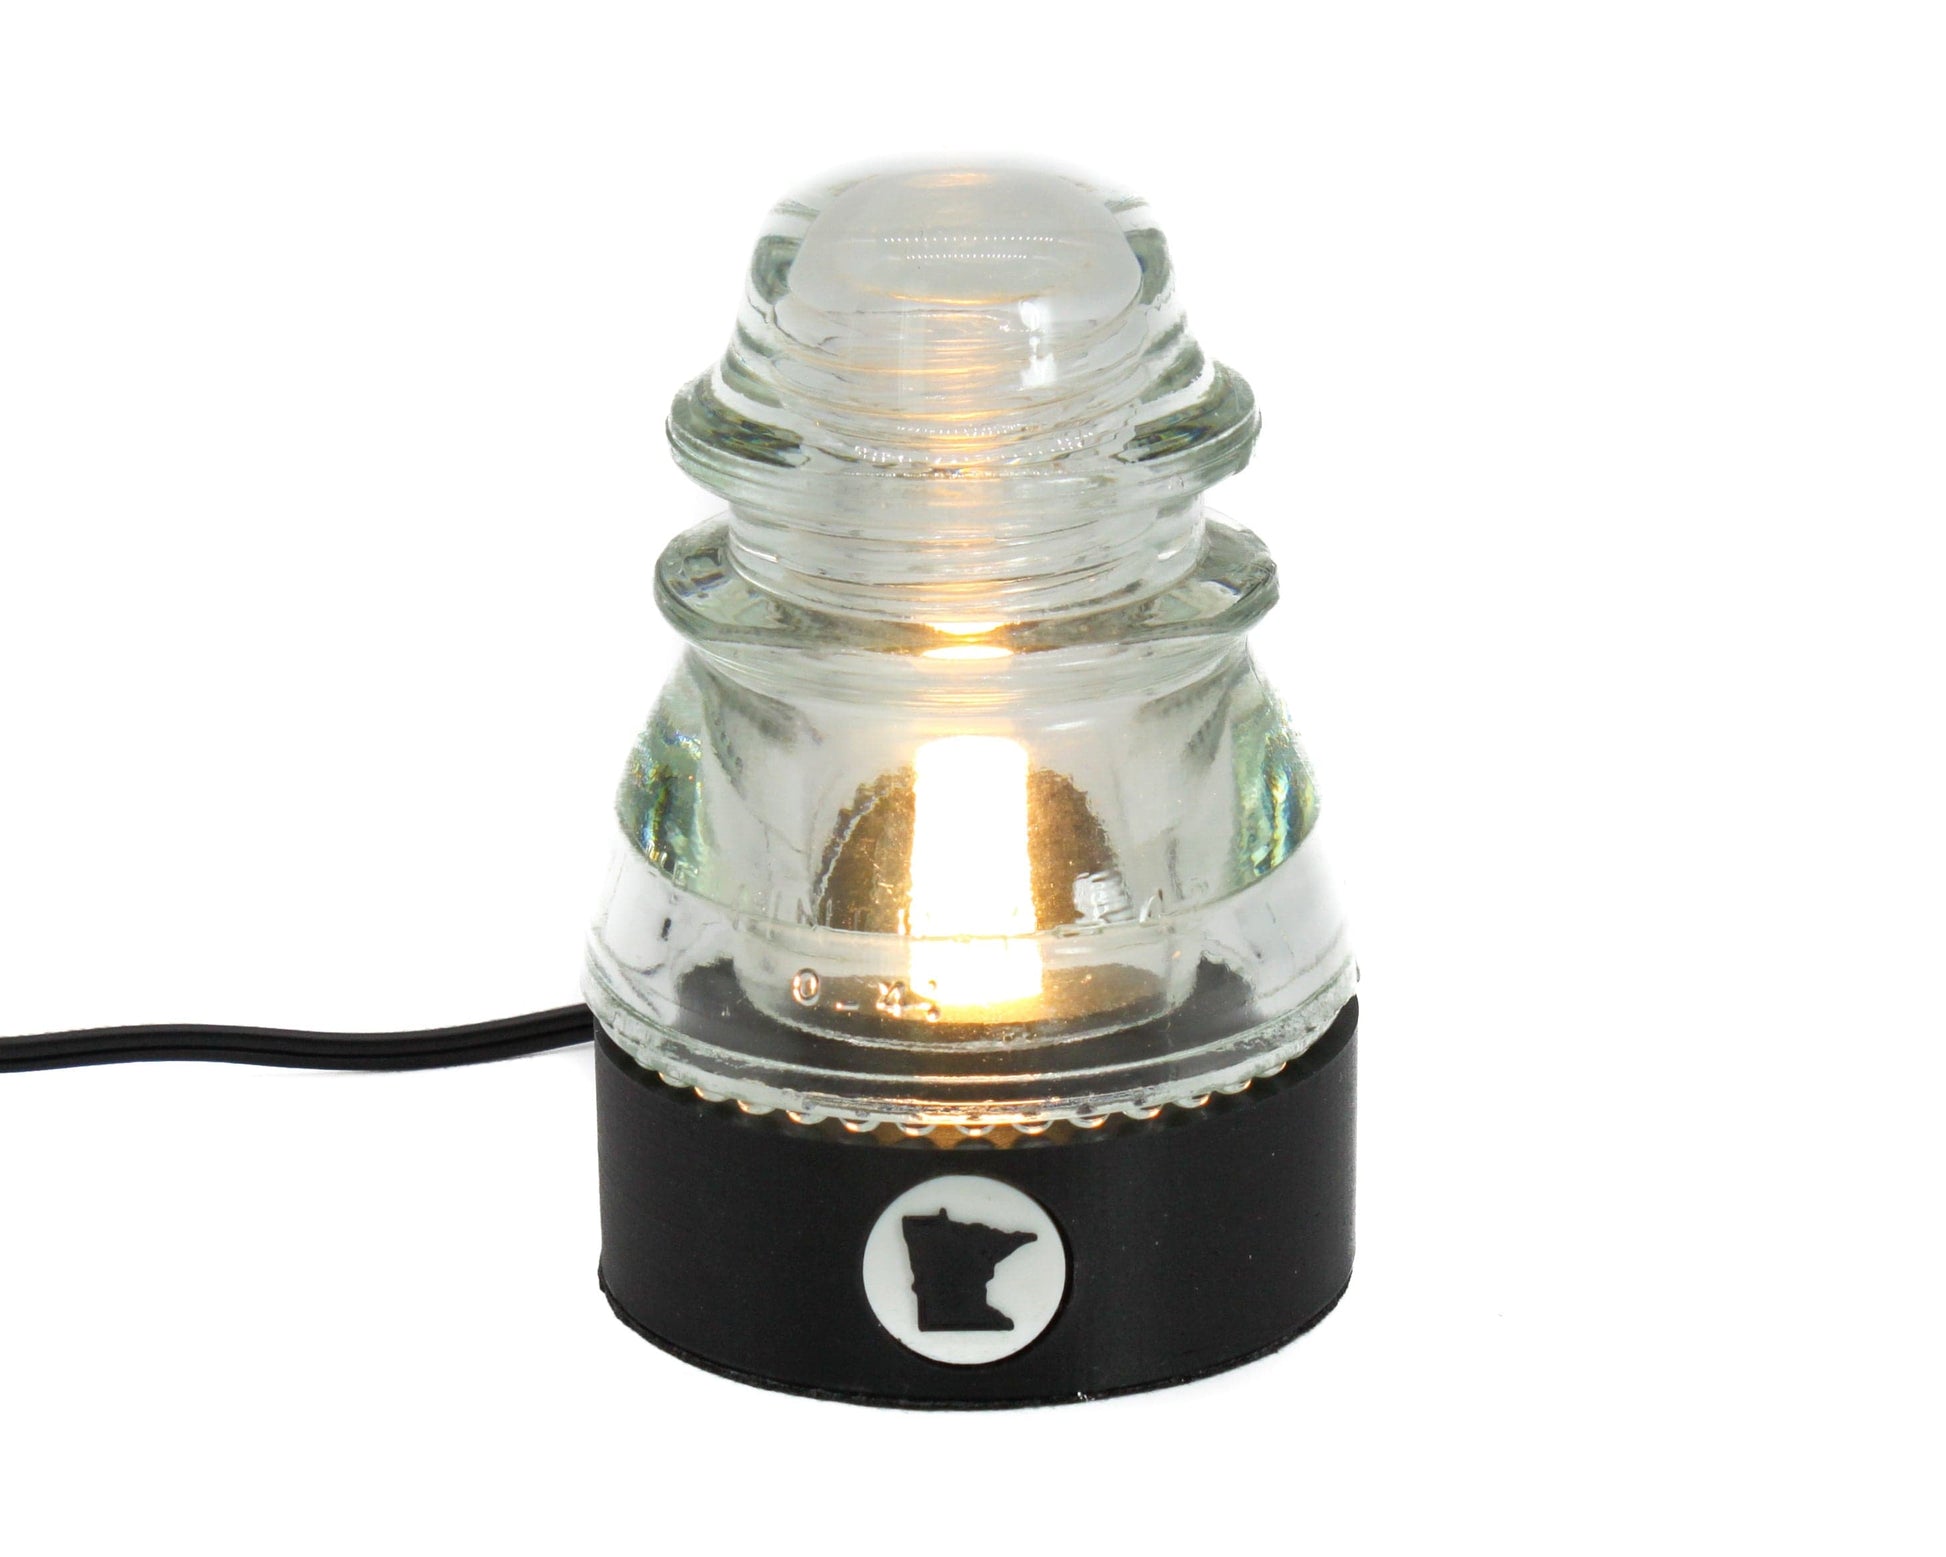 LightAndTimeArt Industrial lamp Lamp Base Kit with icon inserts for "Hemingray-40, -42, -45" Glass Insulators